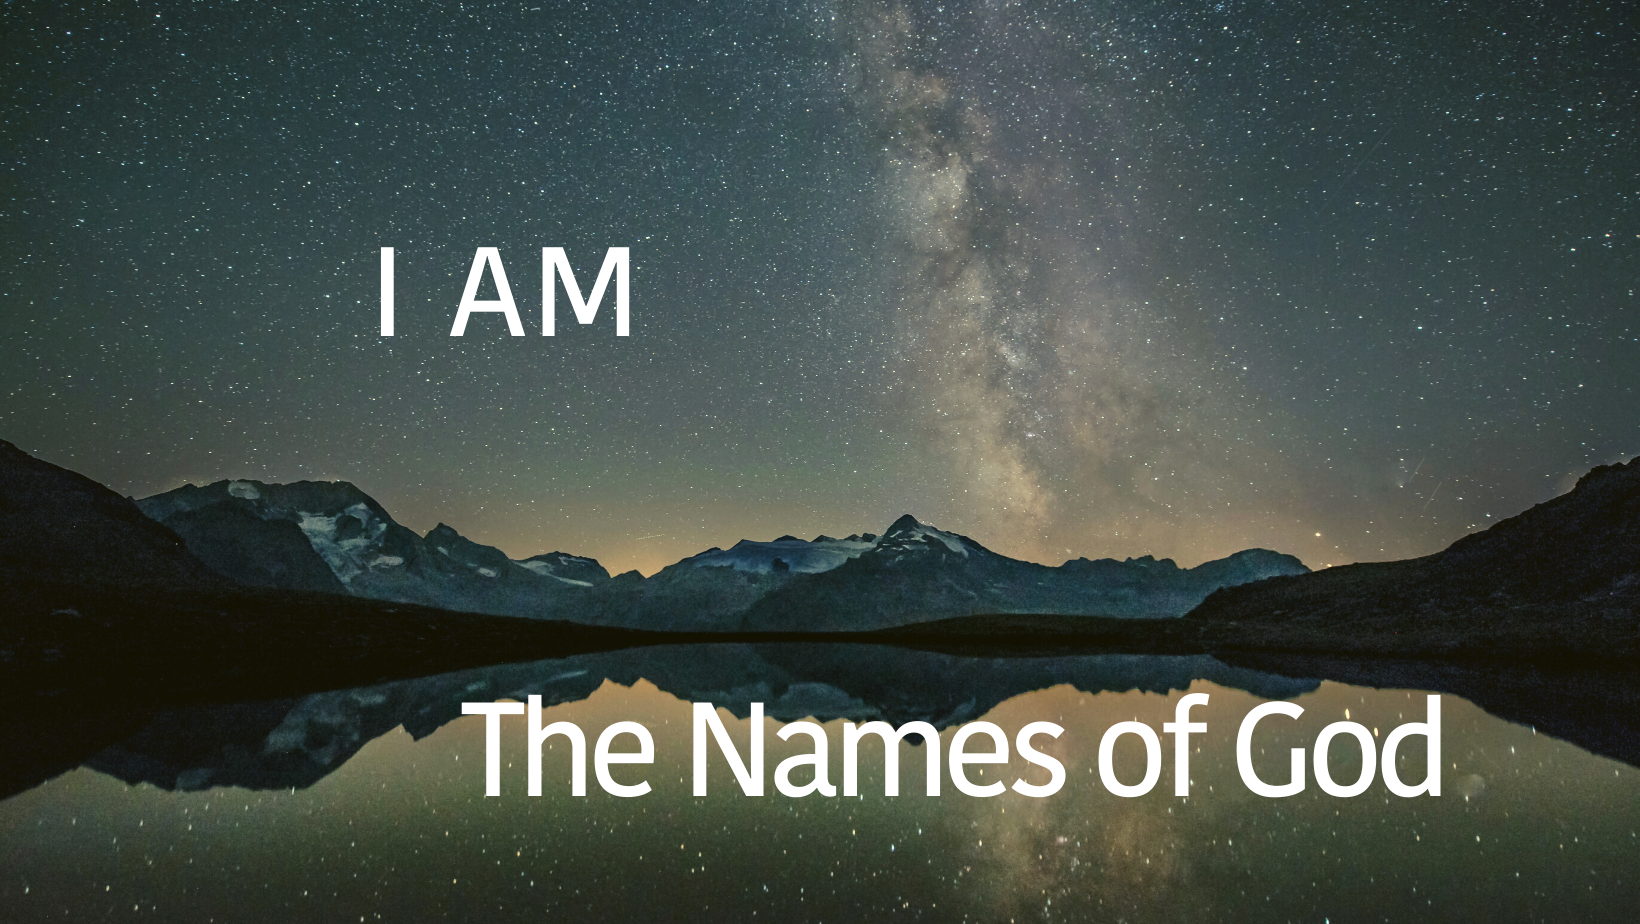 I am - Trhe names of God